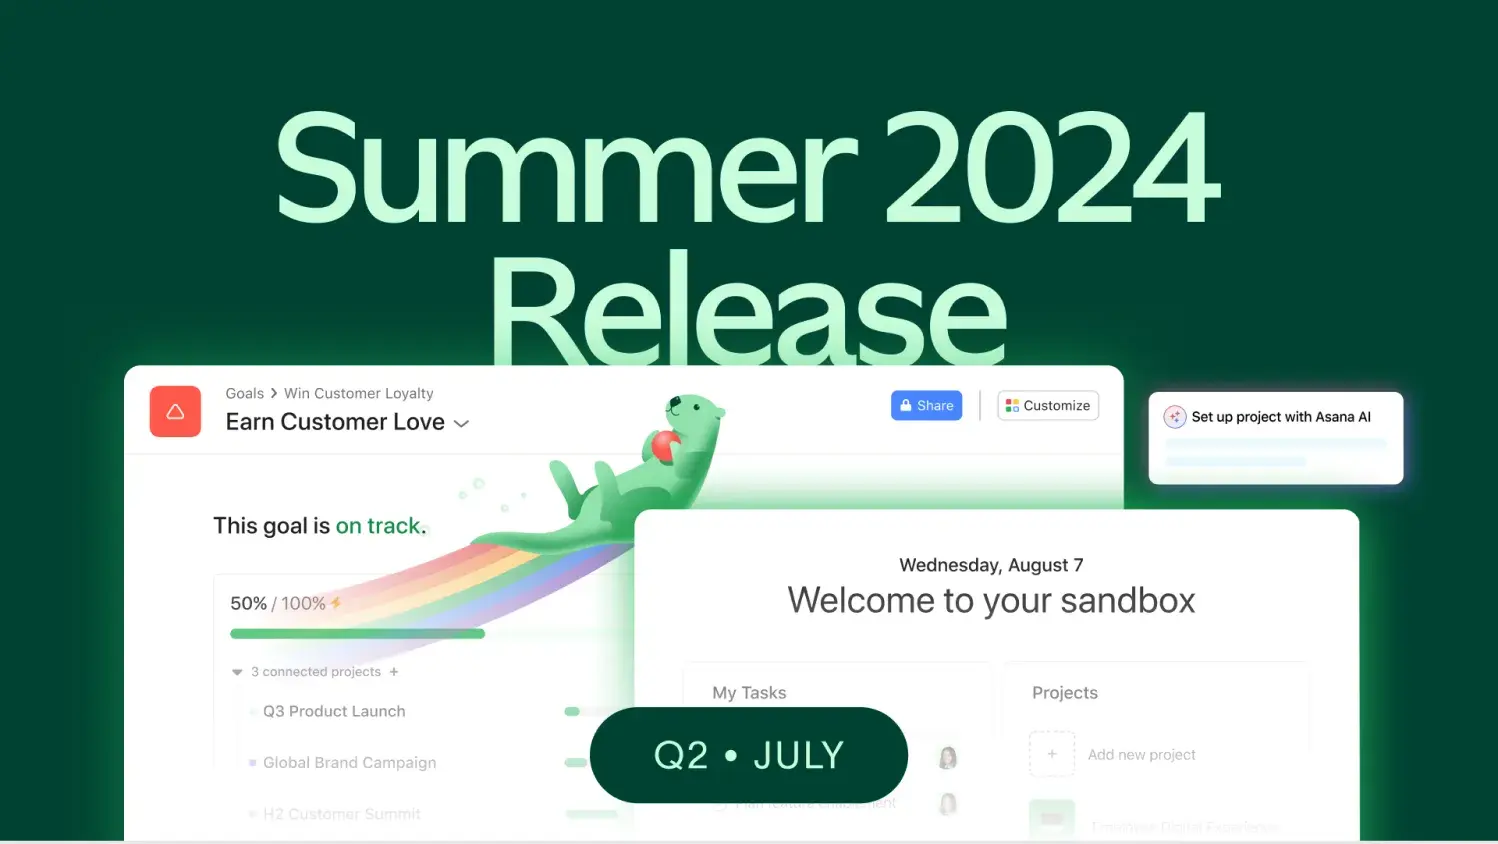 Summer 2024 Release Marketing